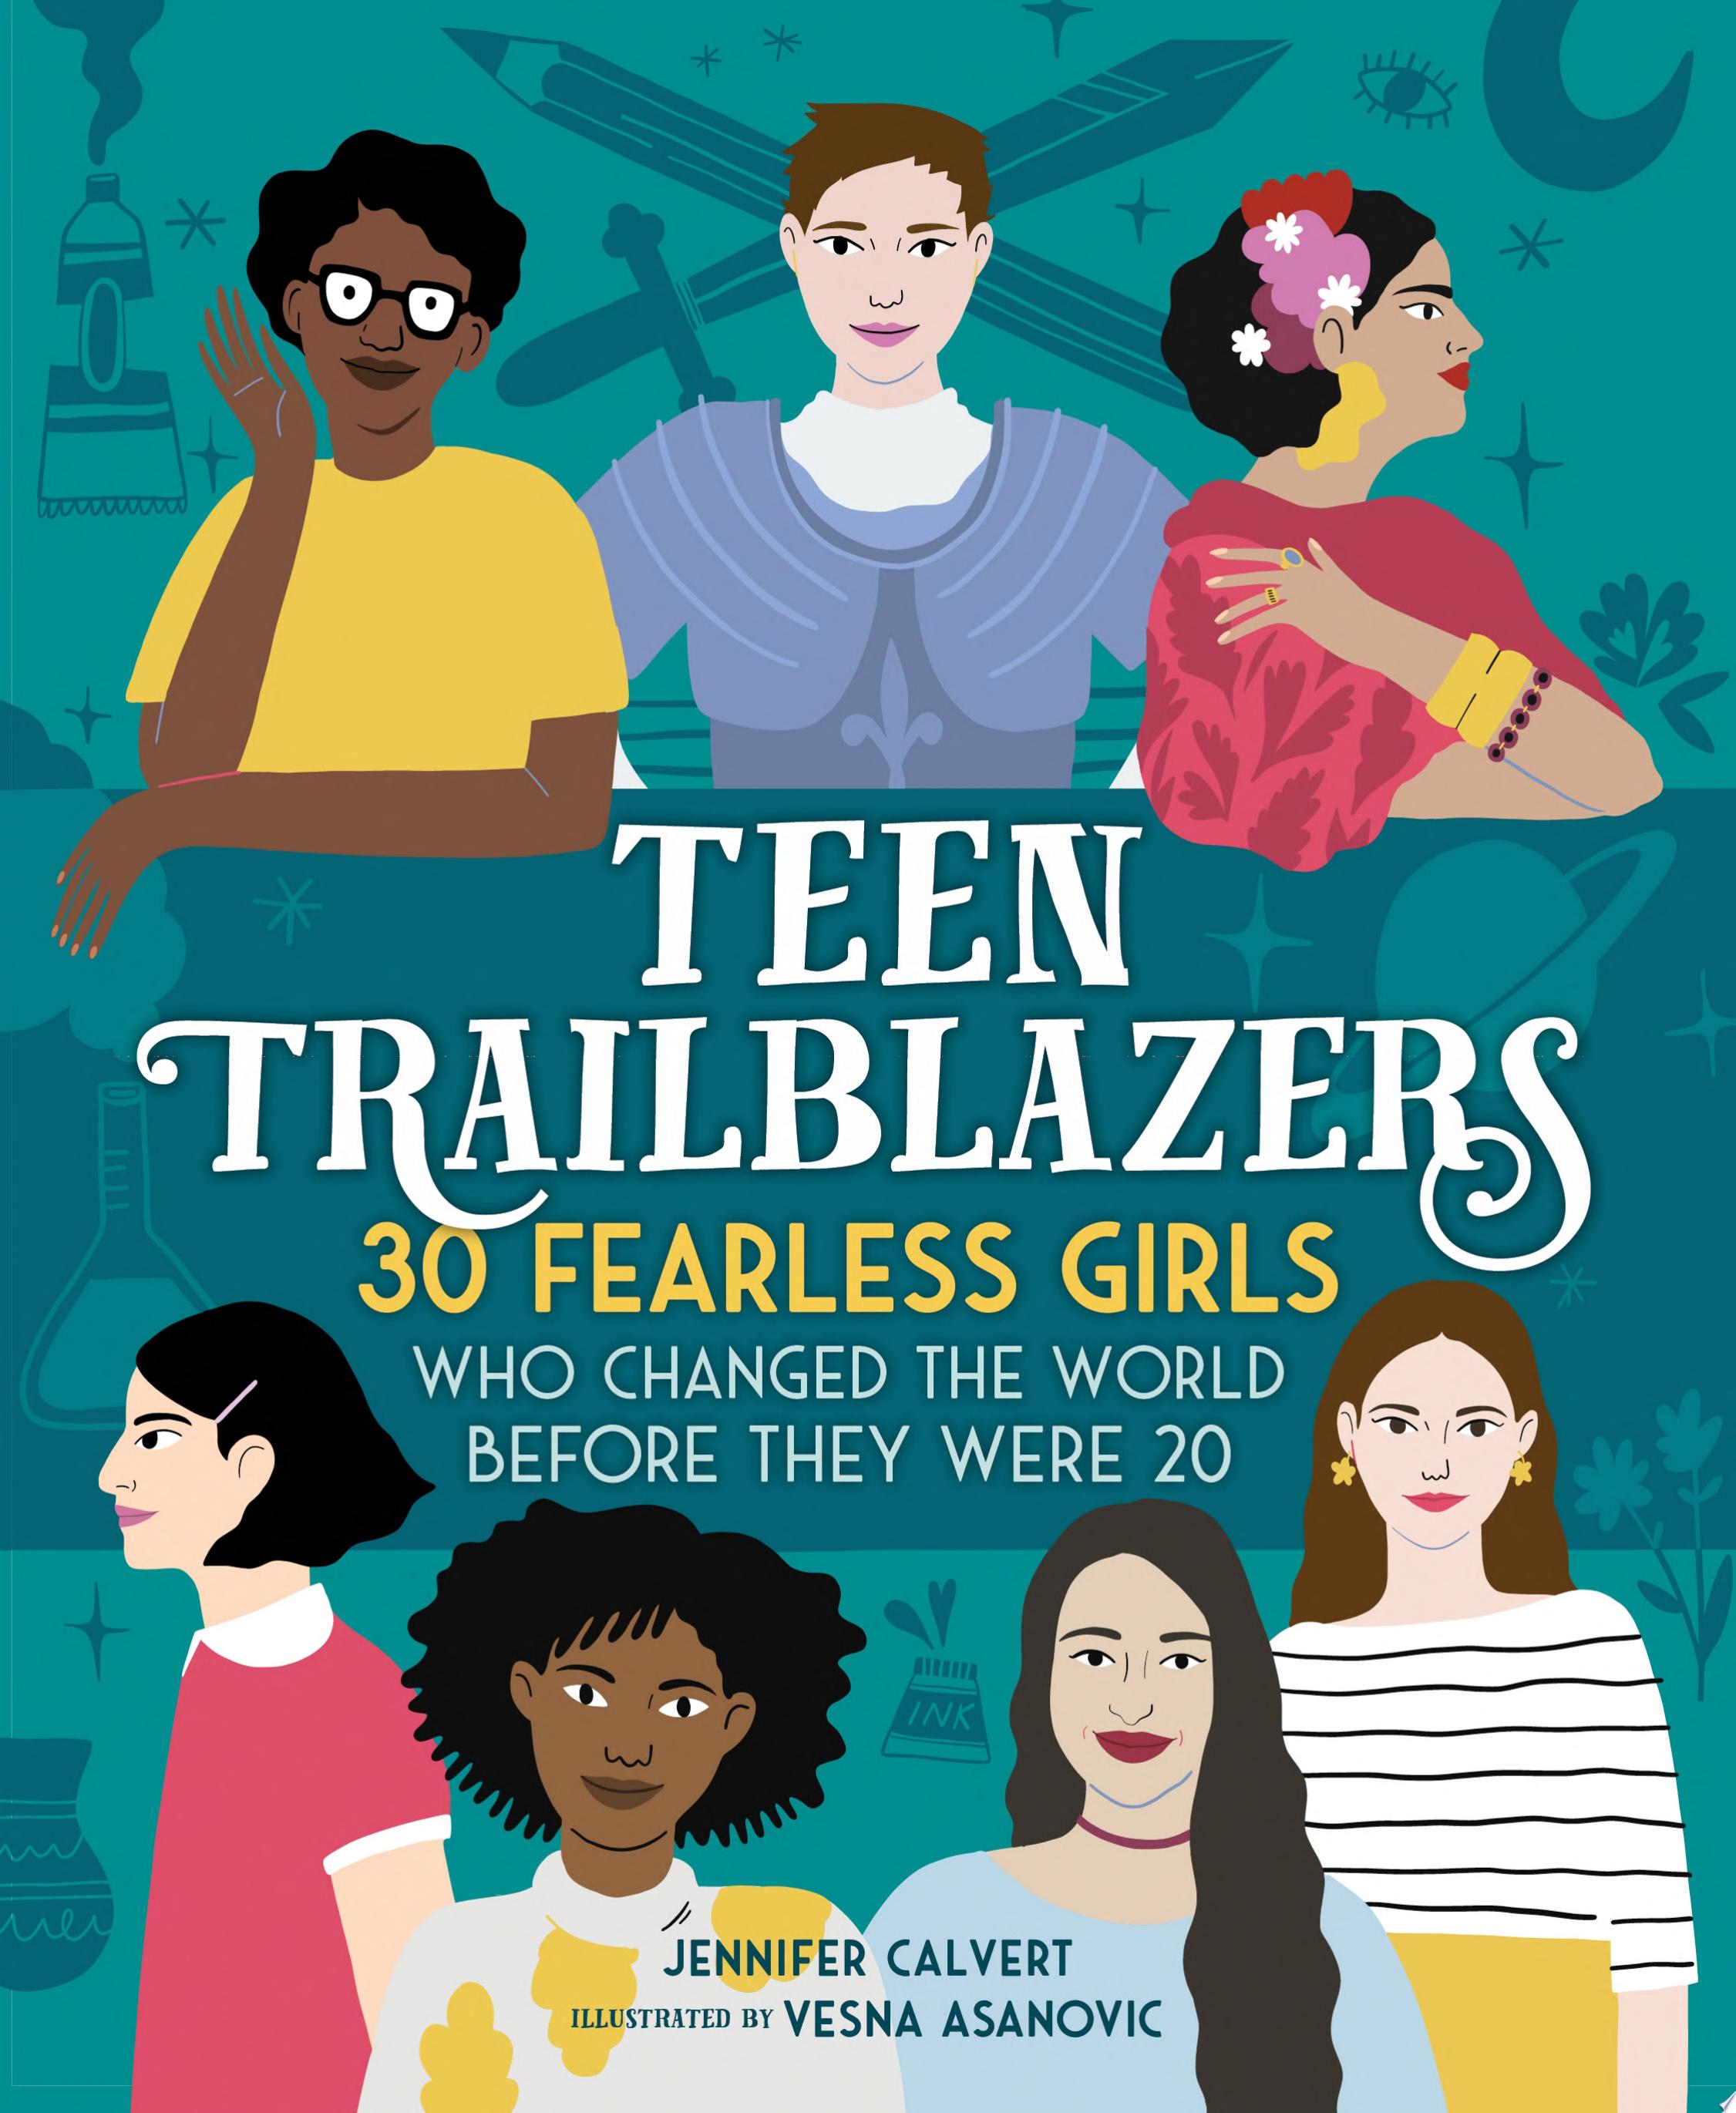 Image for "Teen Trailblazers"